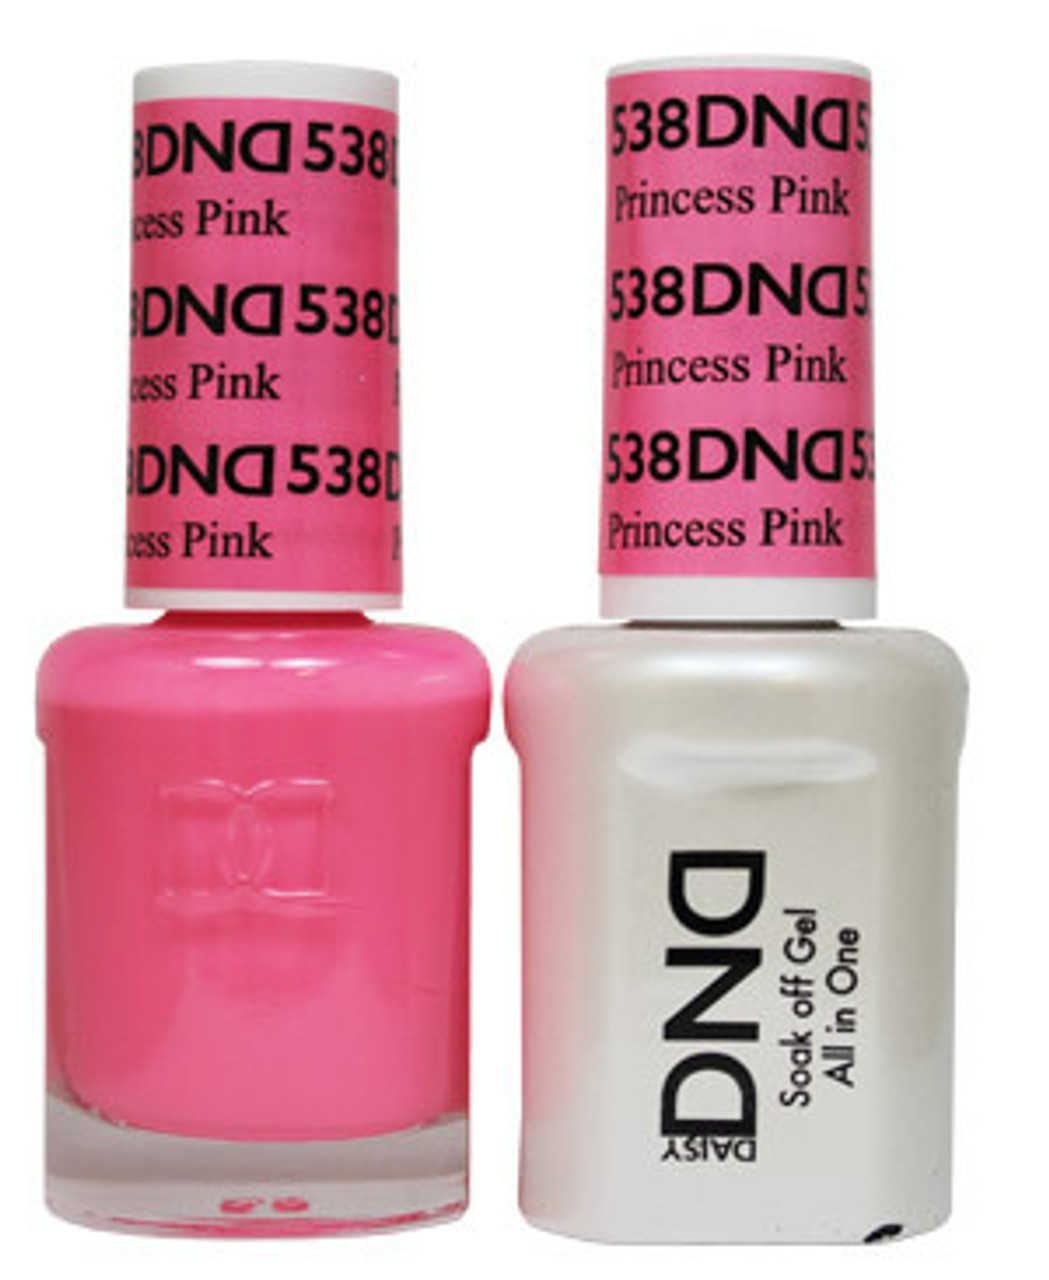 538 - DND - PRINCESS PINK - Diamond Nail Supply, LLC